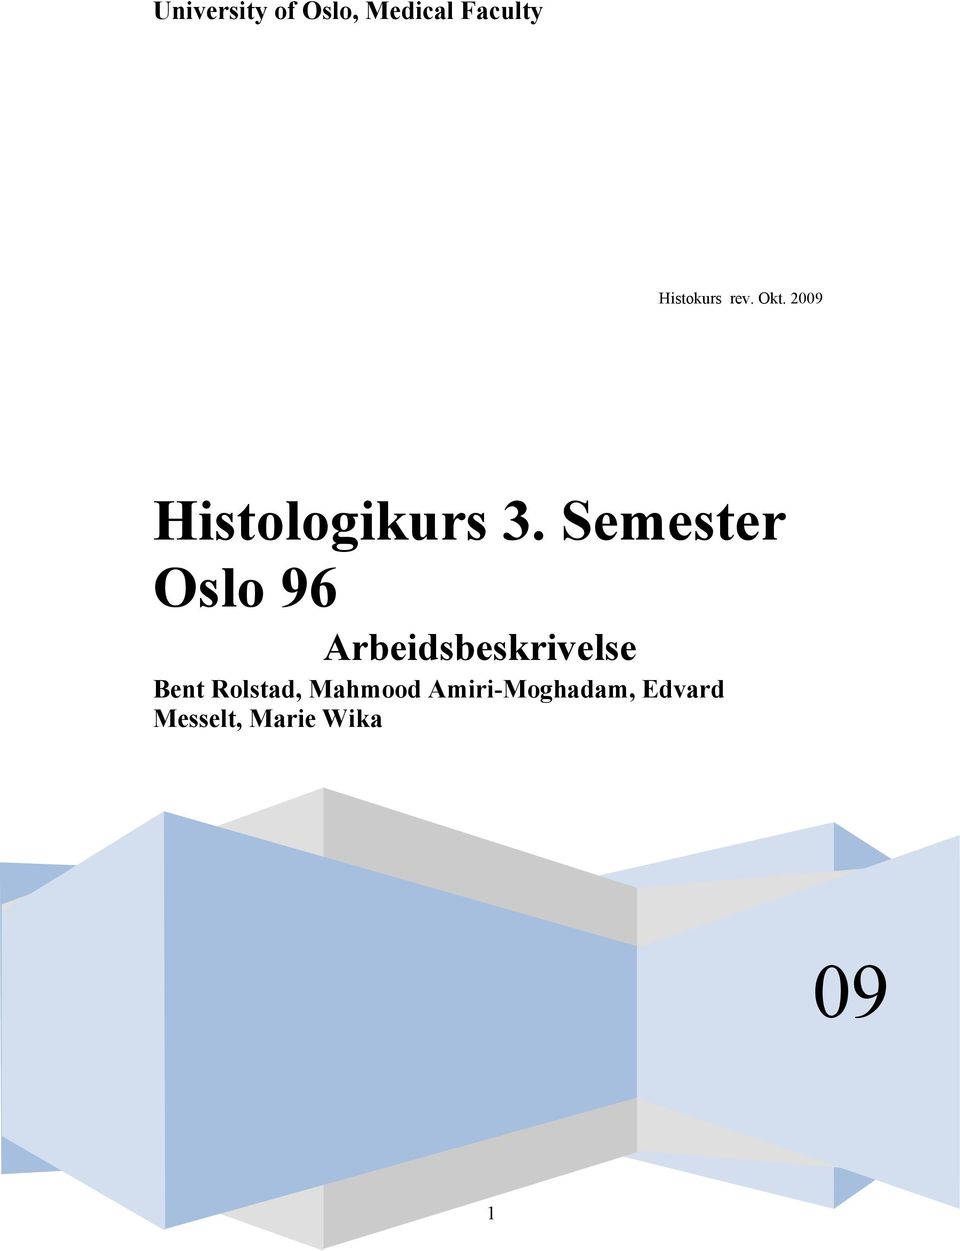 Semester Oslo 96 Arbeidsbeskrivelse Bent